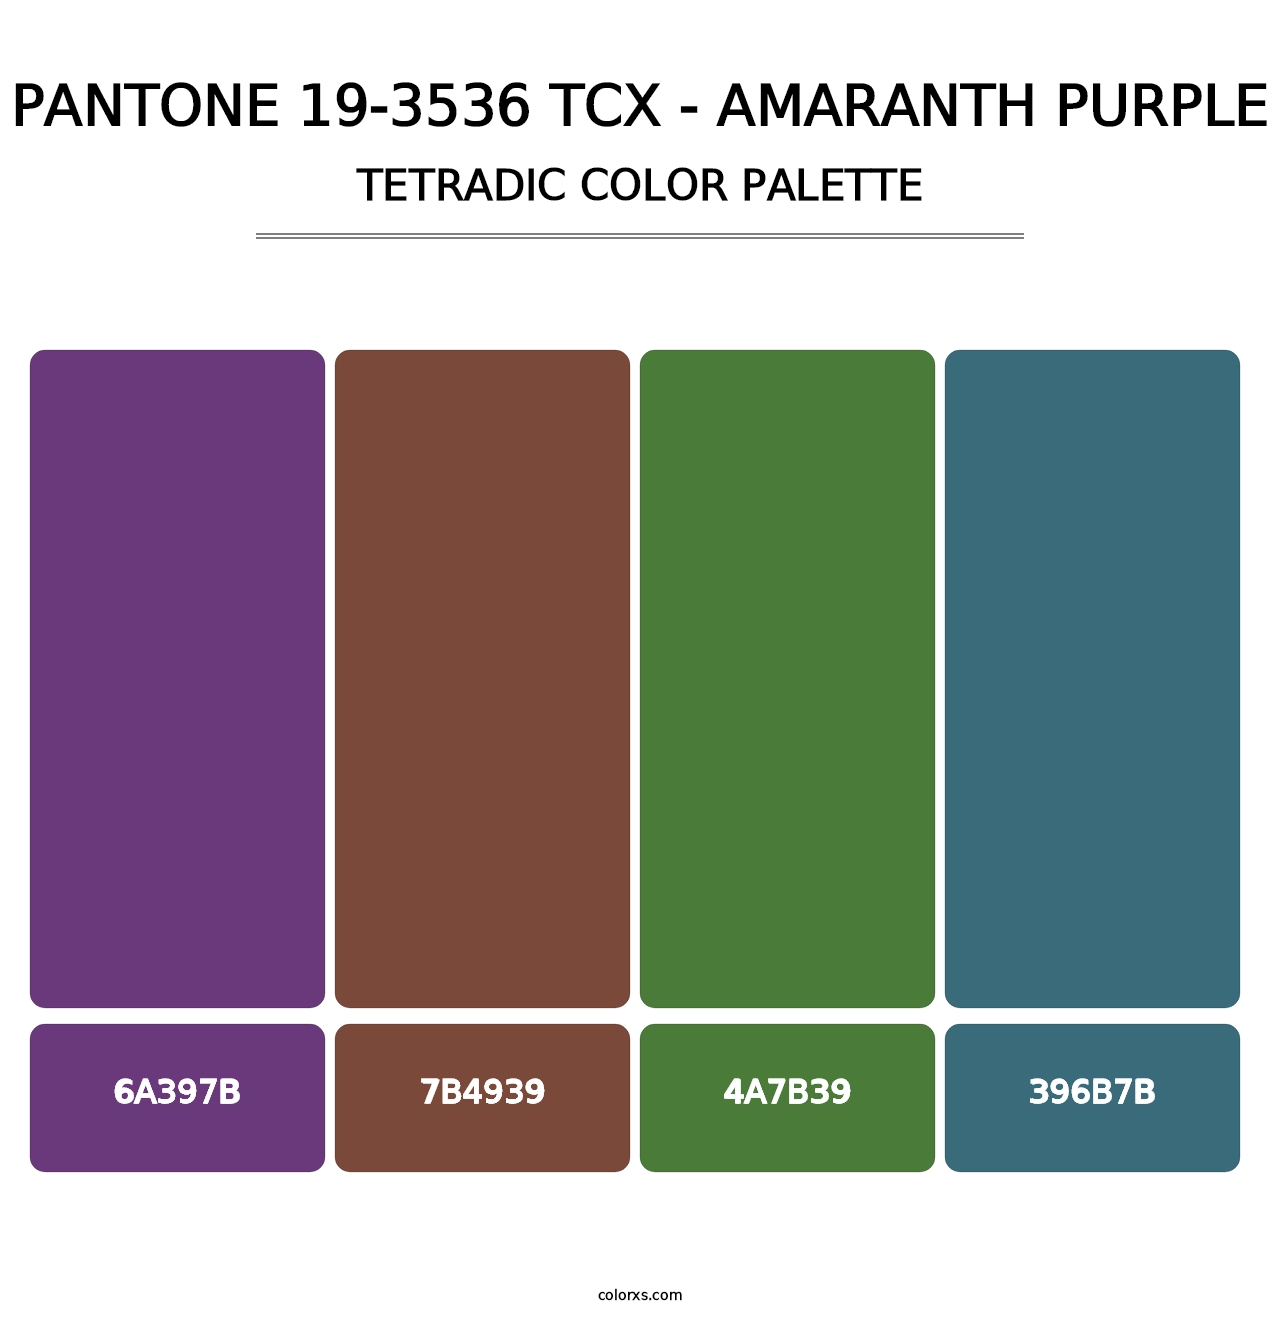 PANTONE 19-3536 TCX - Amaranth Purple - Tetradic Color Palette